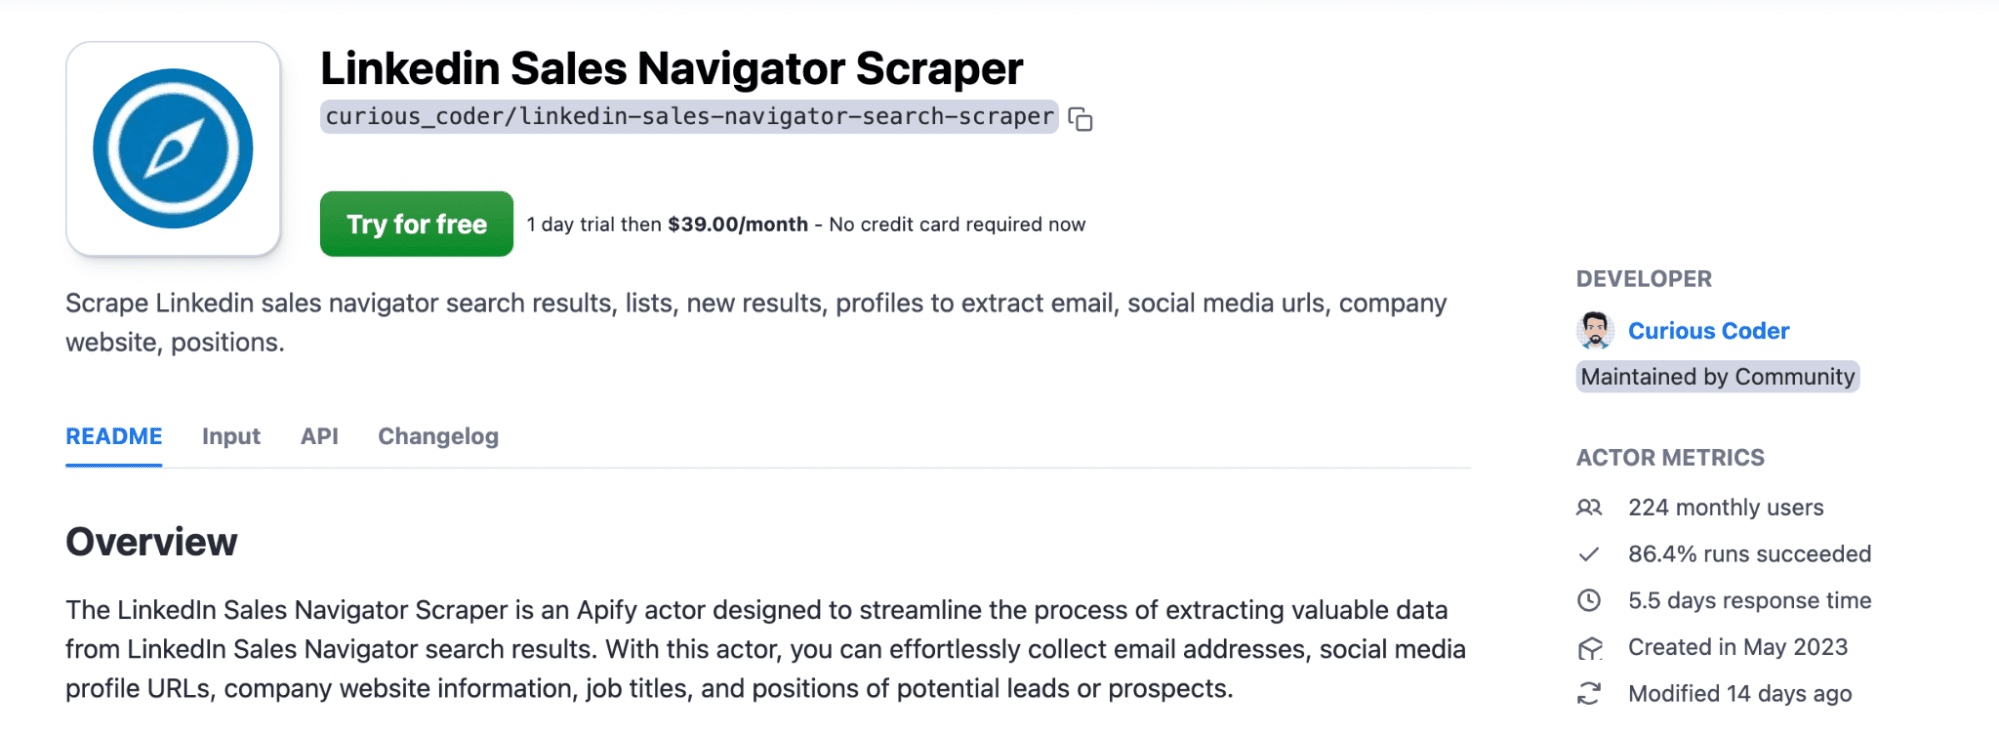 apify linkedin sales navigator scraper product page - image38.png